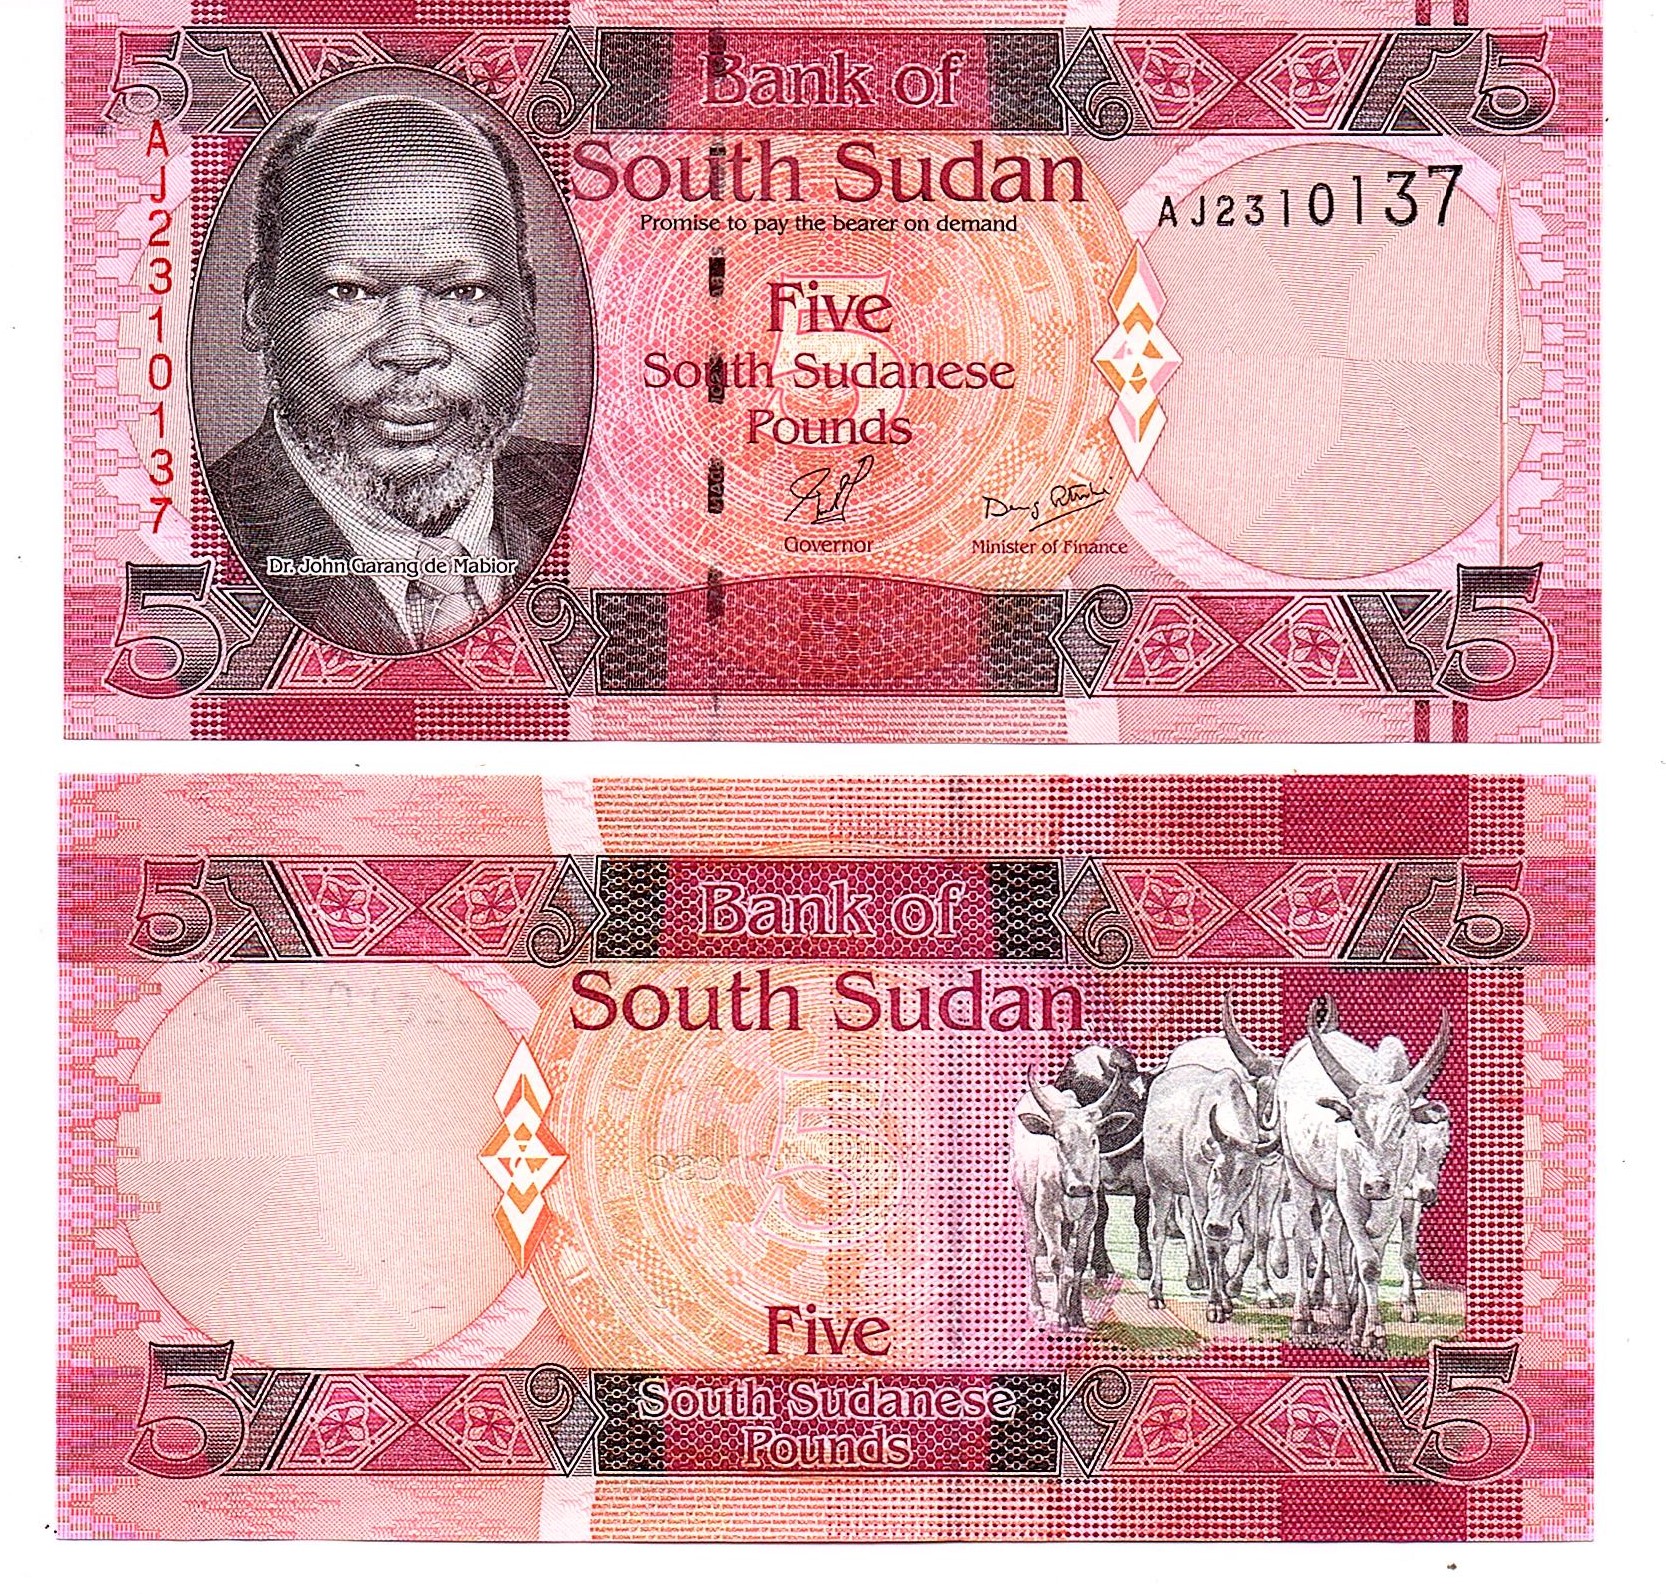 South-Sudan #6   5 South Sudanese Pounds